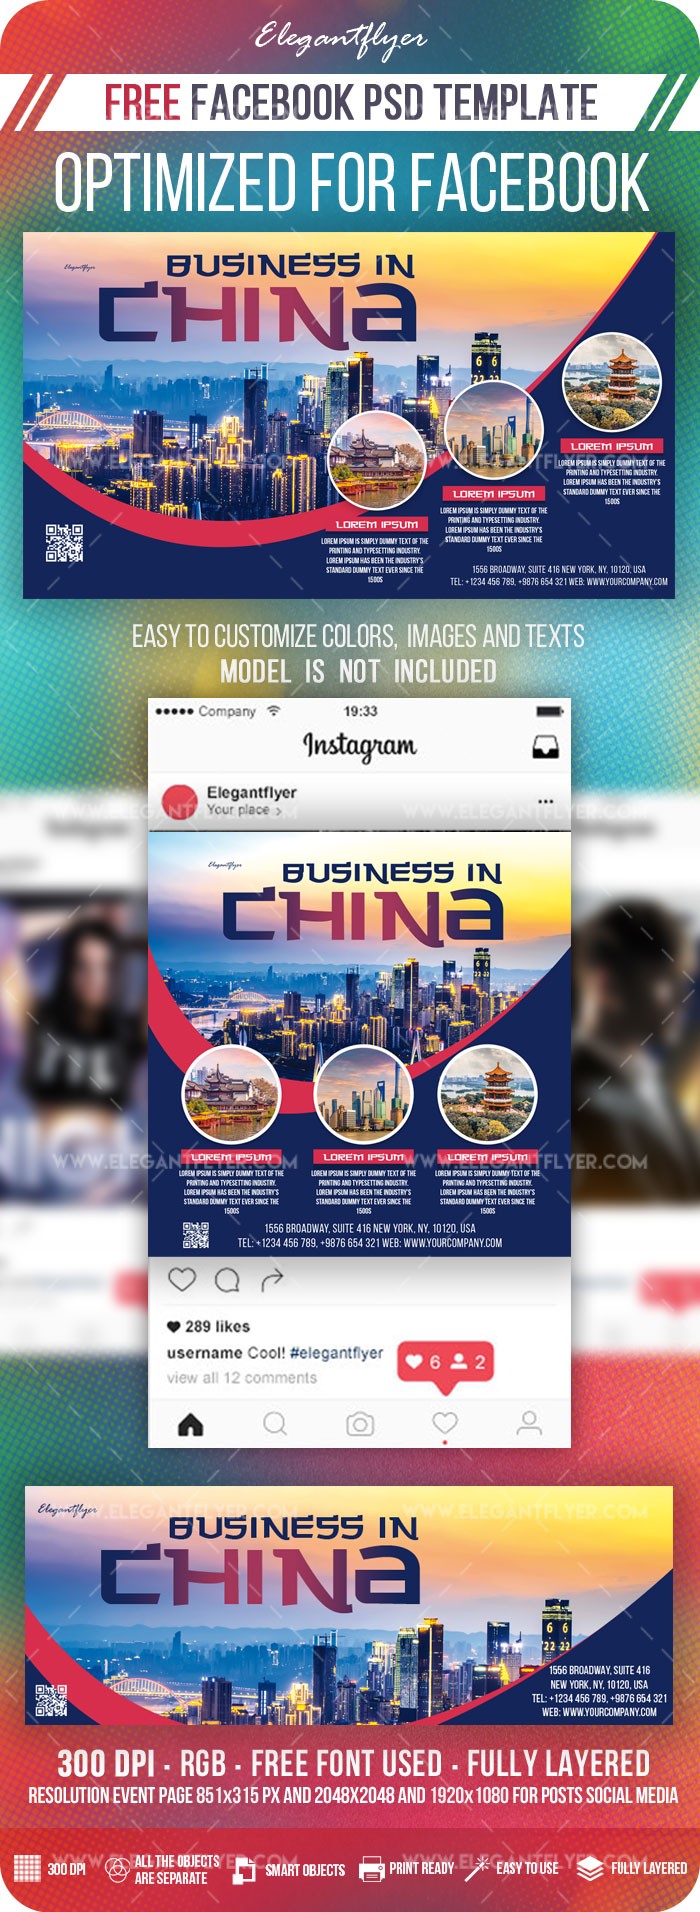 Business in China Facebook by ElegantFlyer